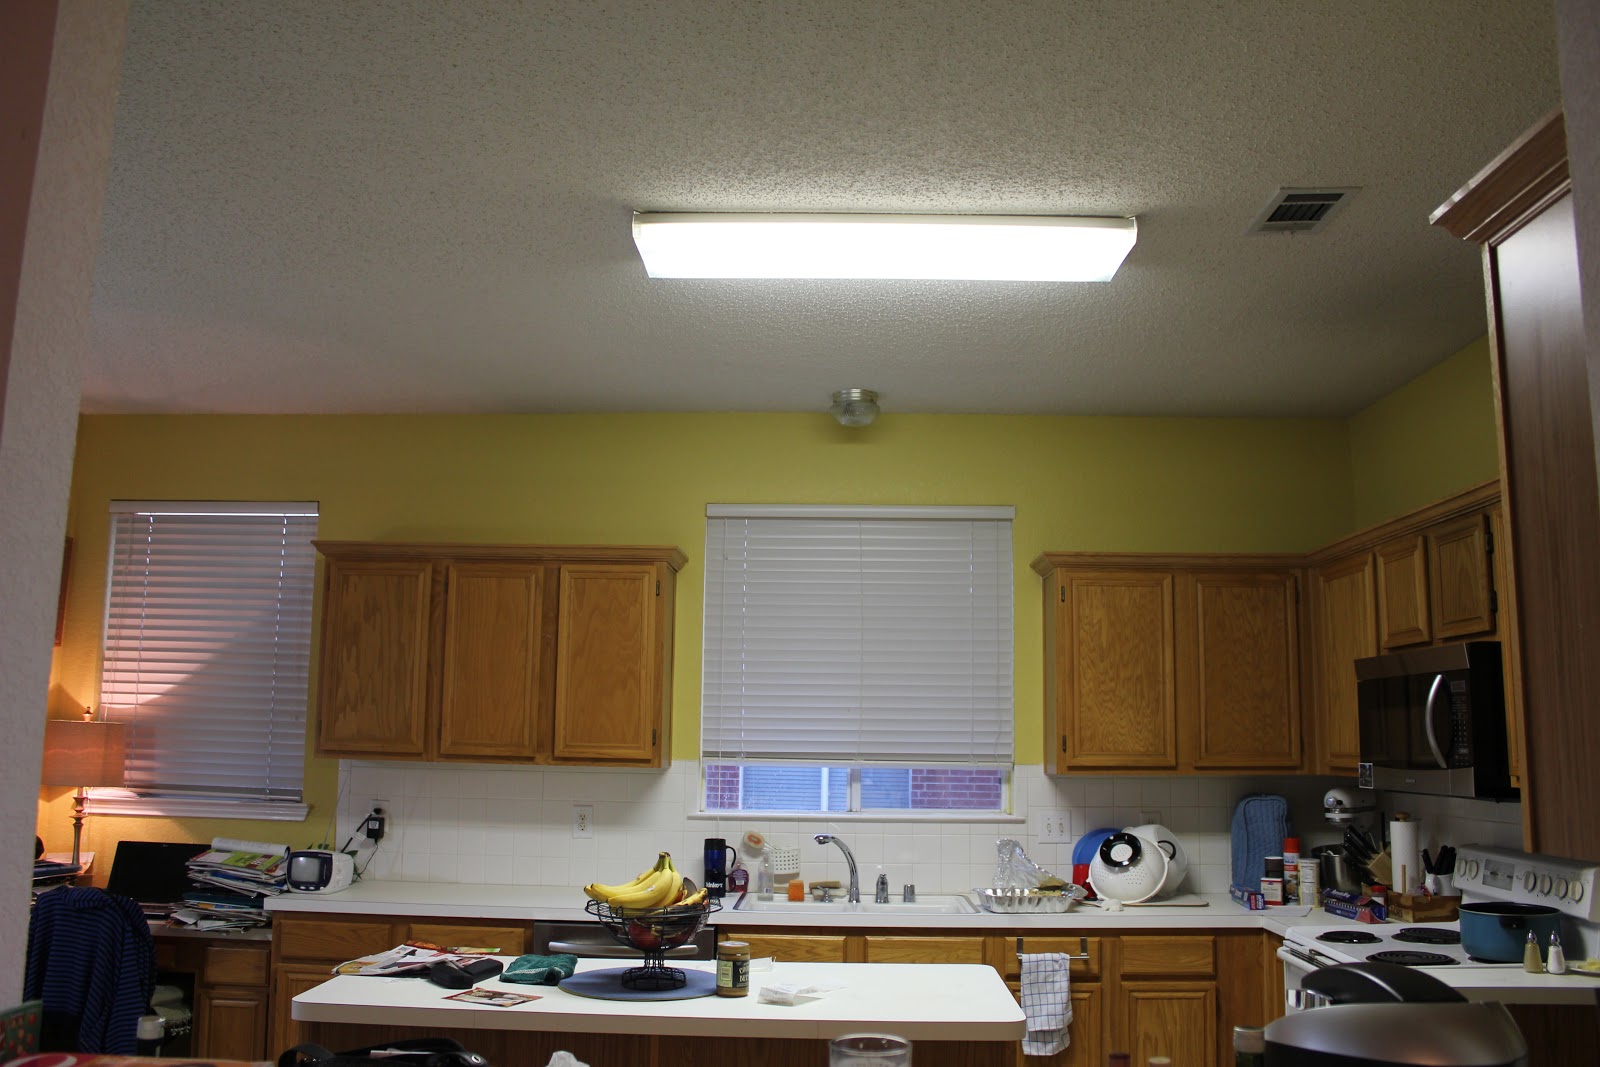 kitchen has flourescent light